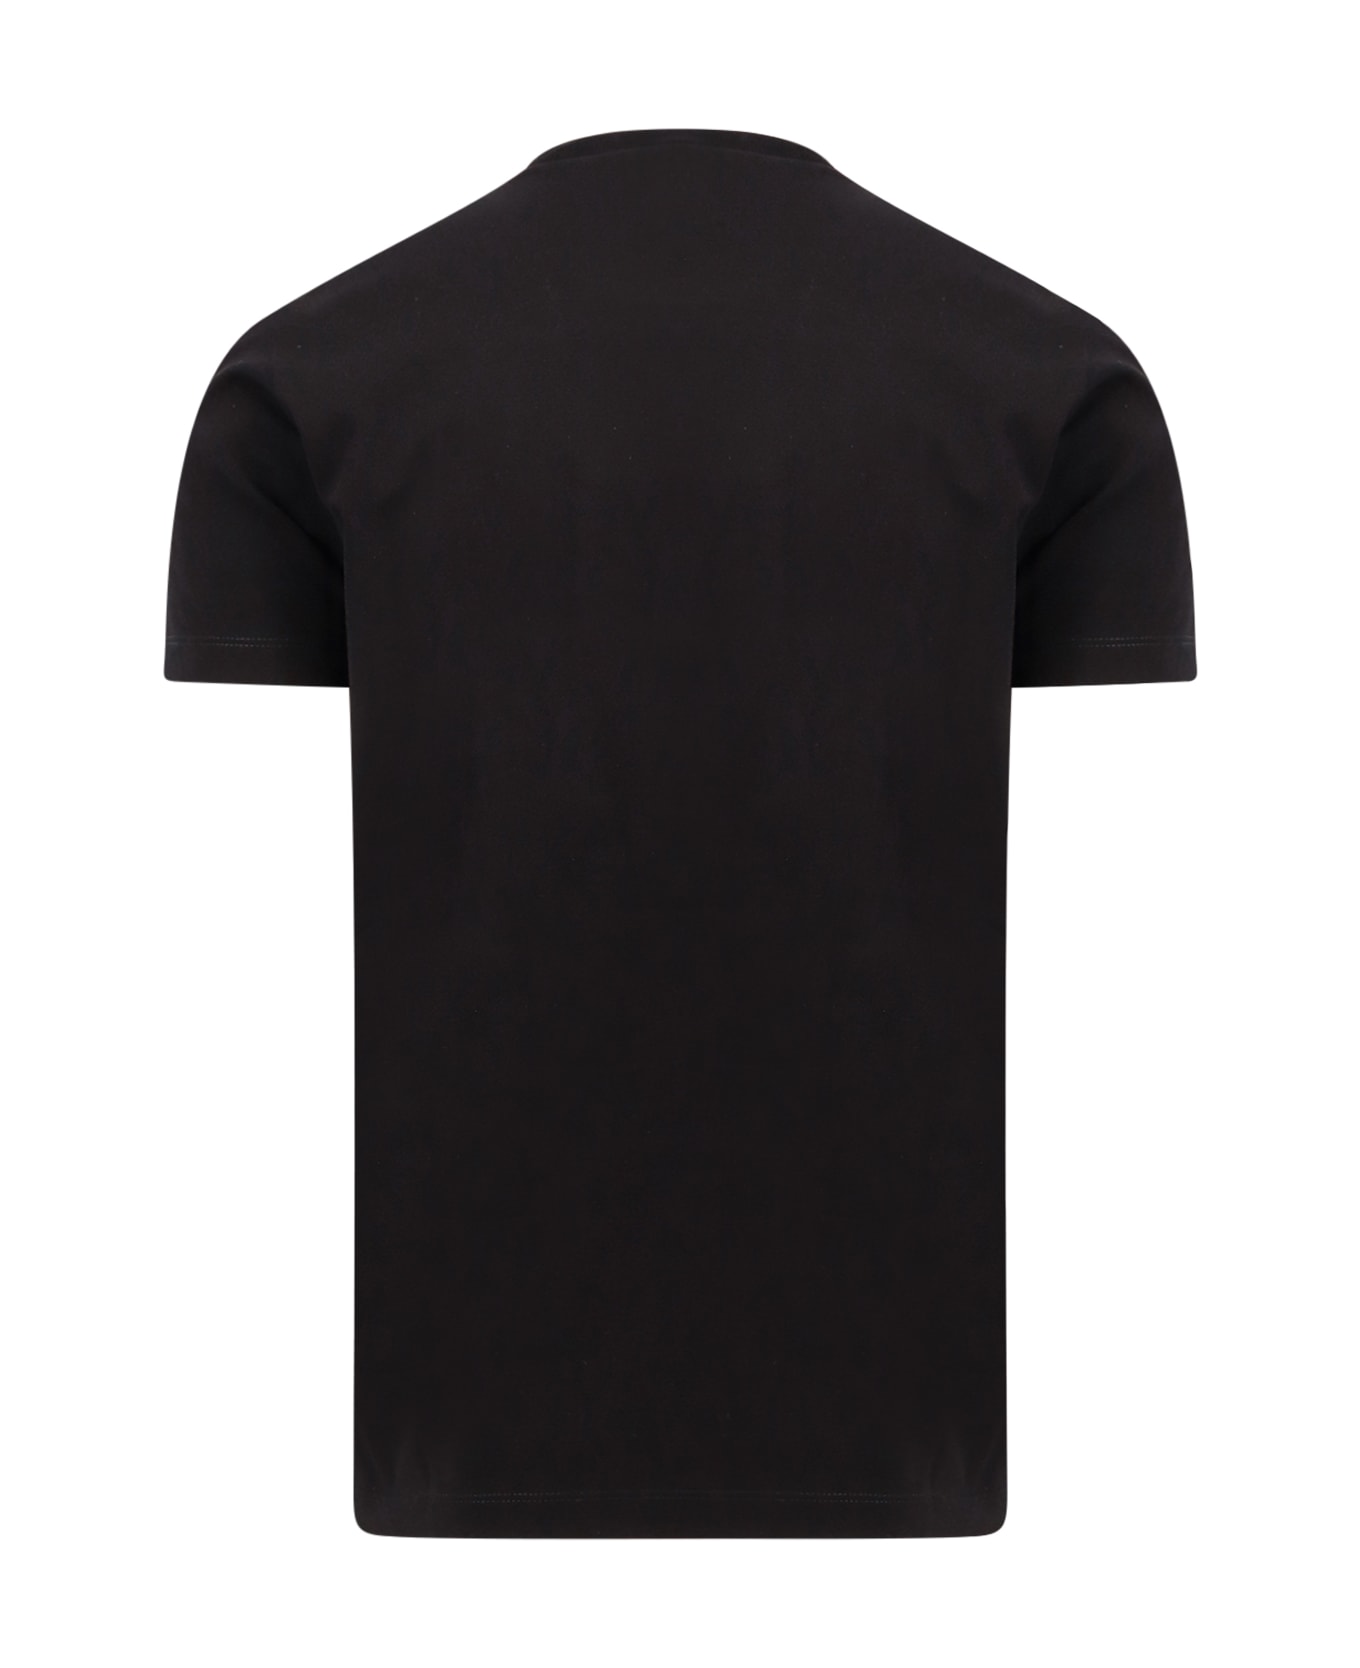 Dsquared2 Icon Blur Cool Fit T-shirt - Black